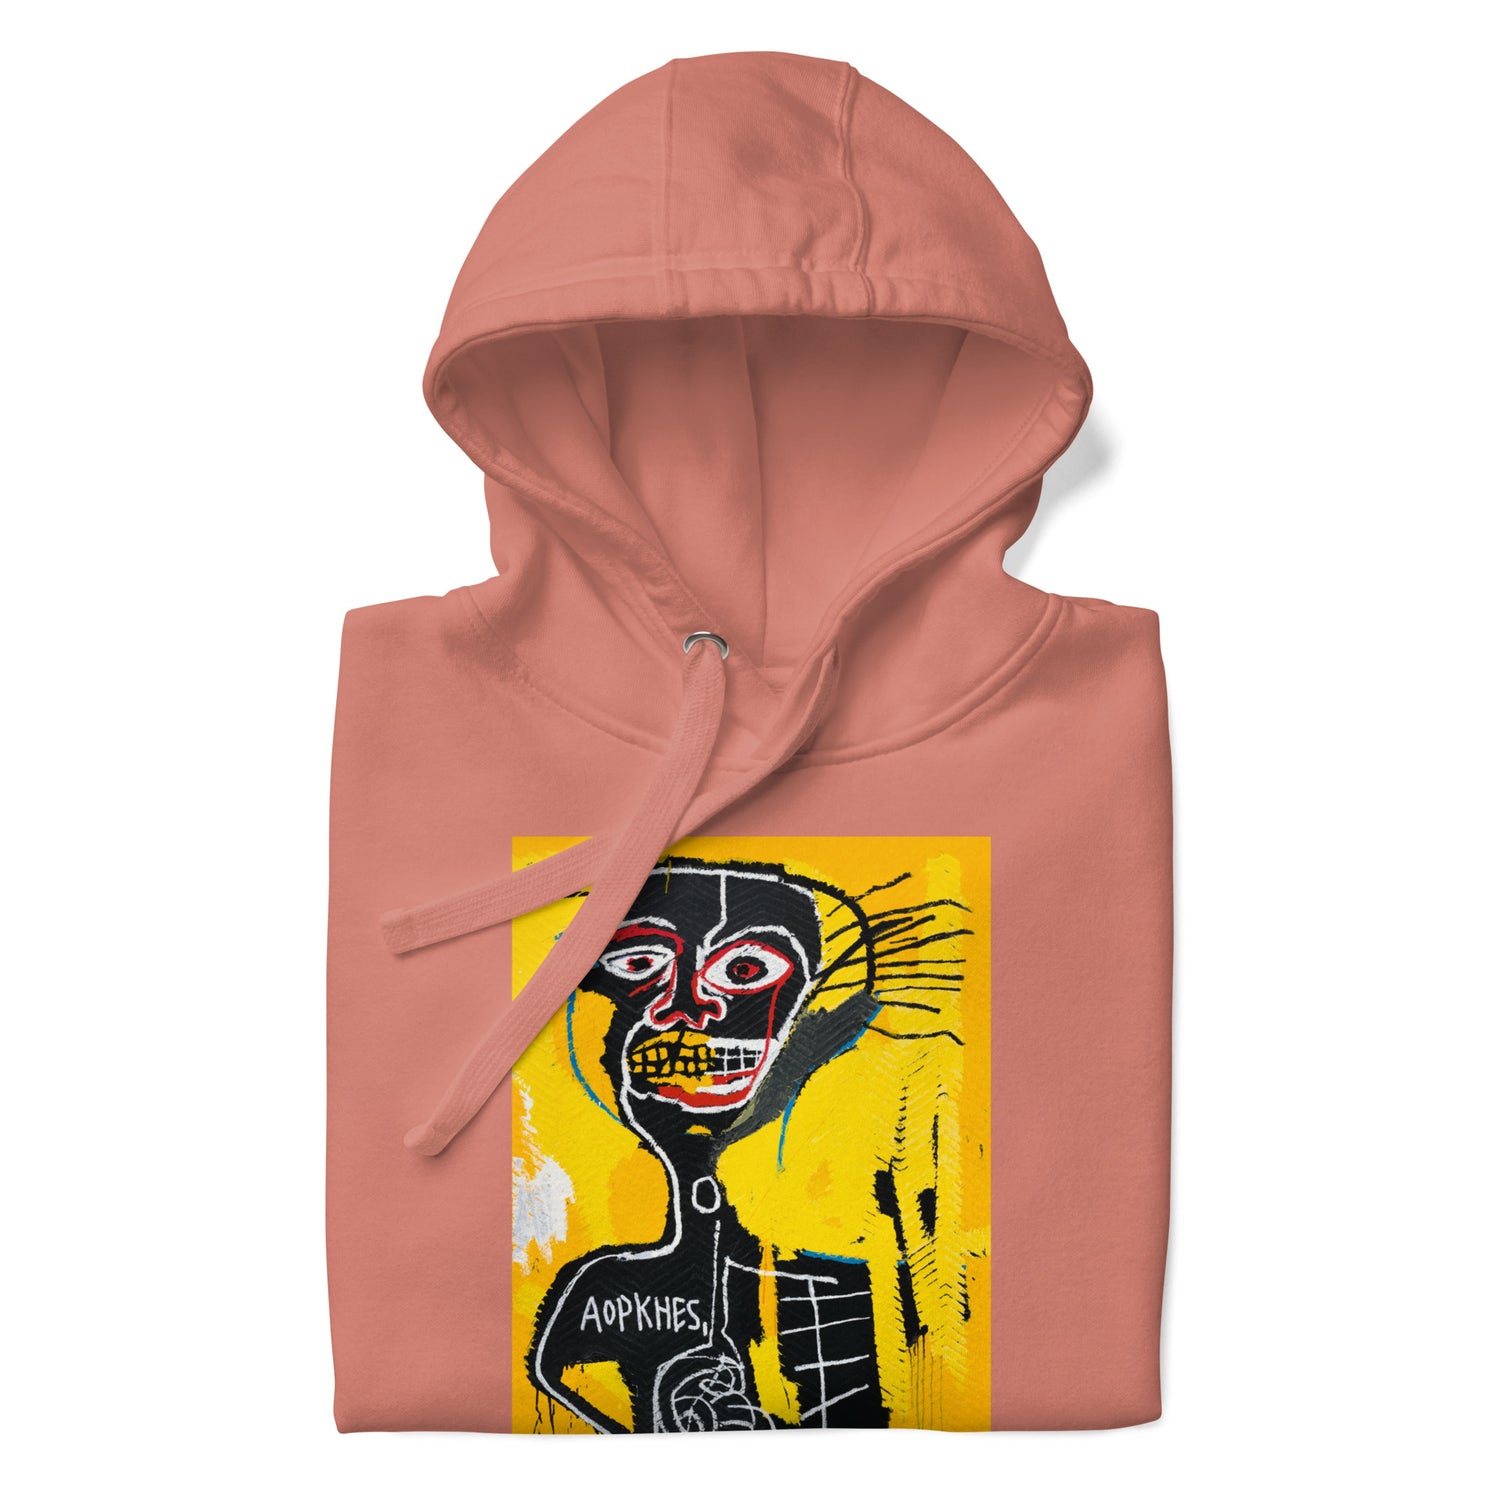 Jean-Michel Basquiat "Cabeza" Artwork Printed Premium Streetwear Sweatshirt Hoodie Salmon Pink